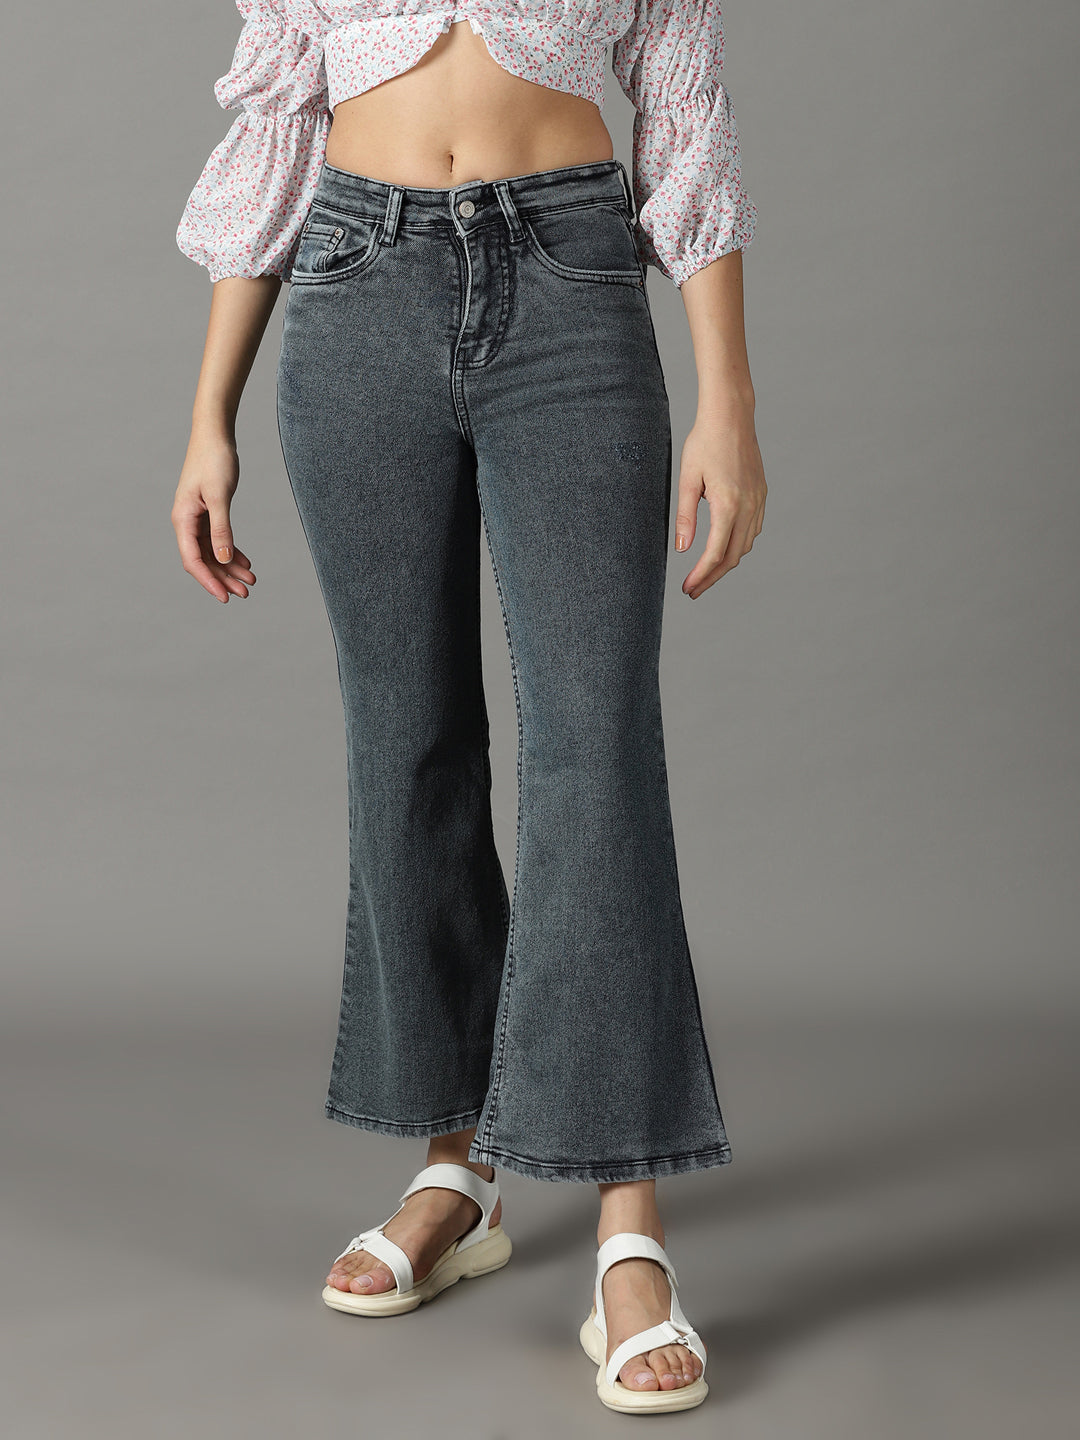 Women's Grey Solid Bootcut Denim Jeans